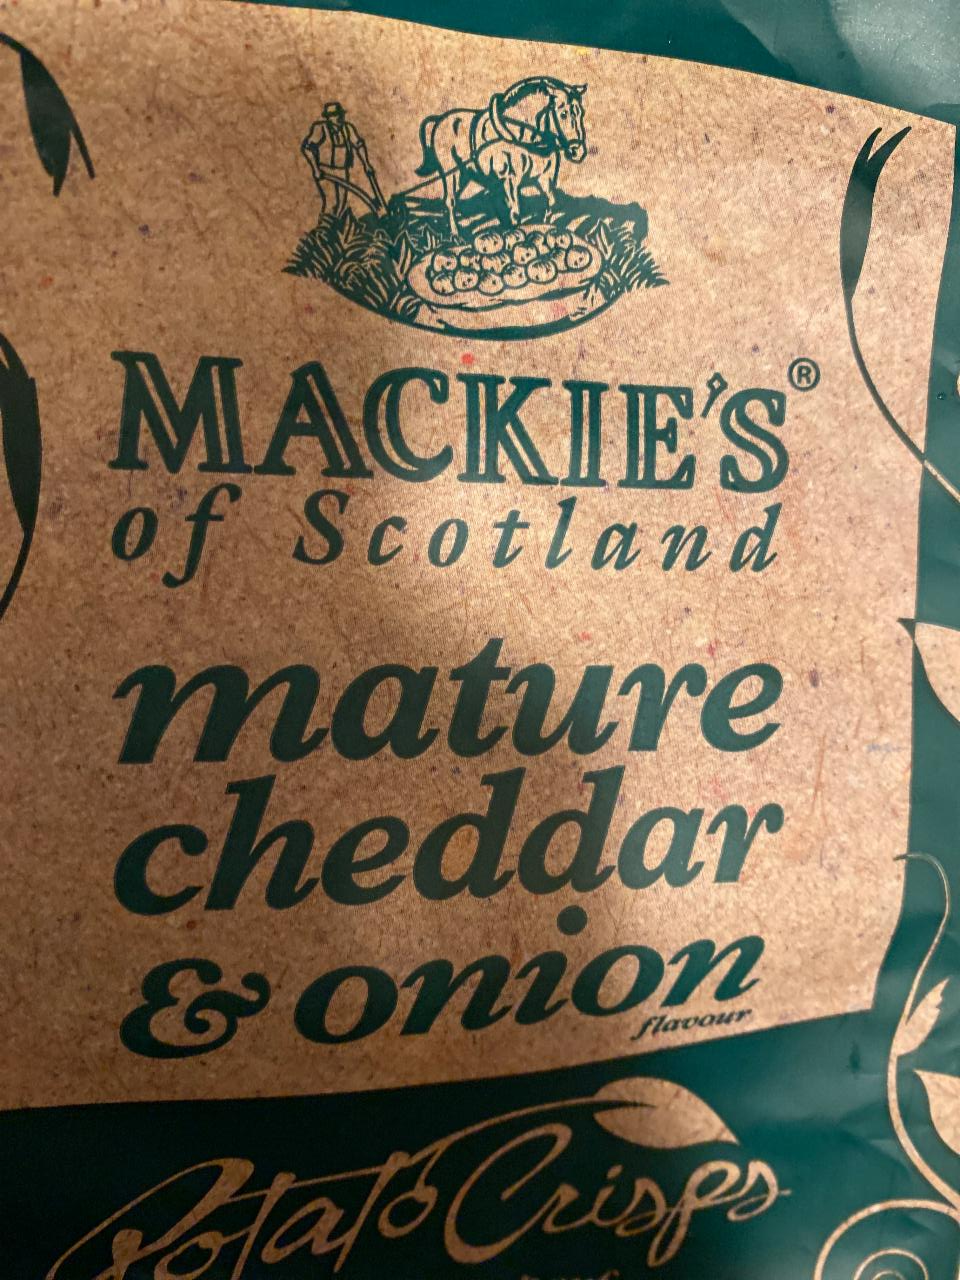 Fotografie - Potato Crisps Mature Cheddar & Onion Mackie's Of Scotland